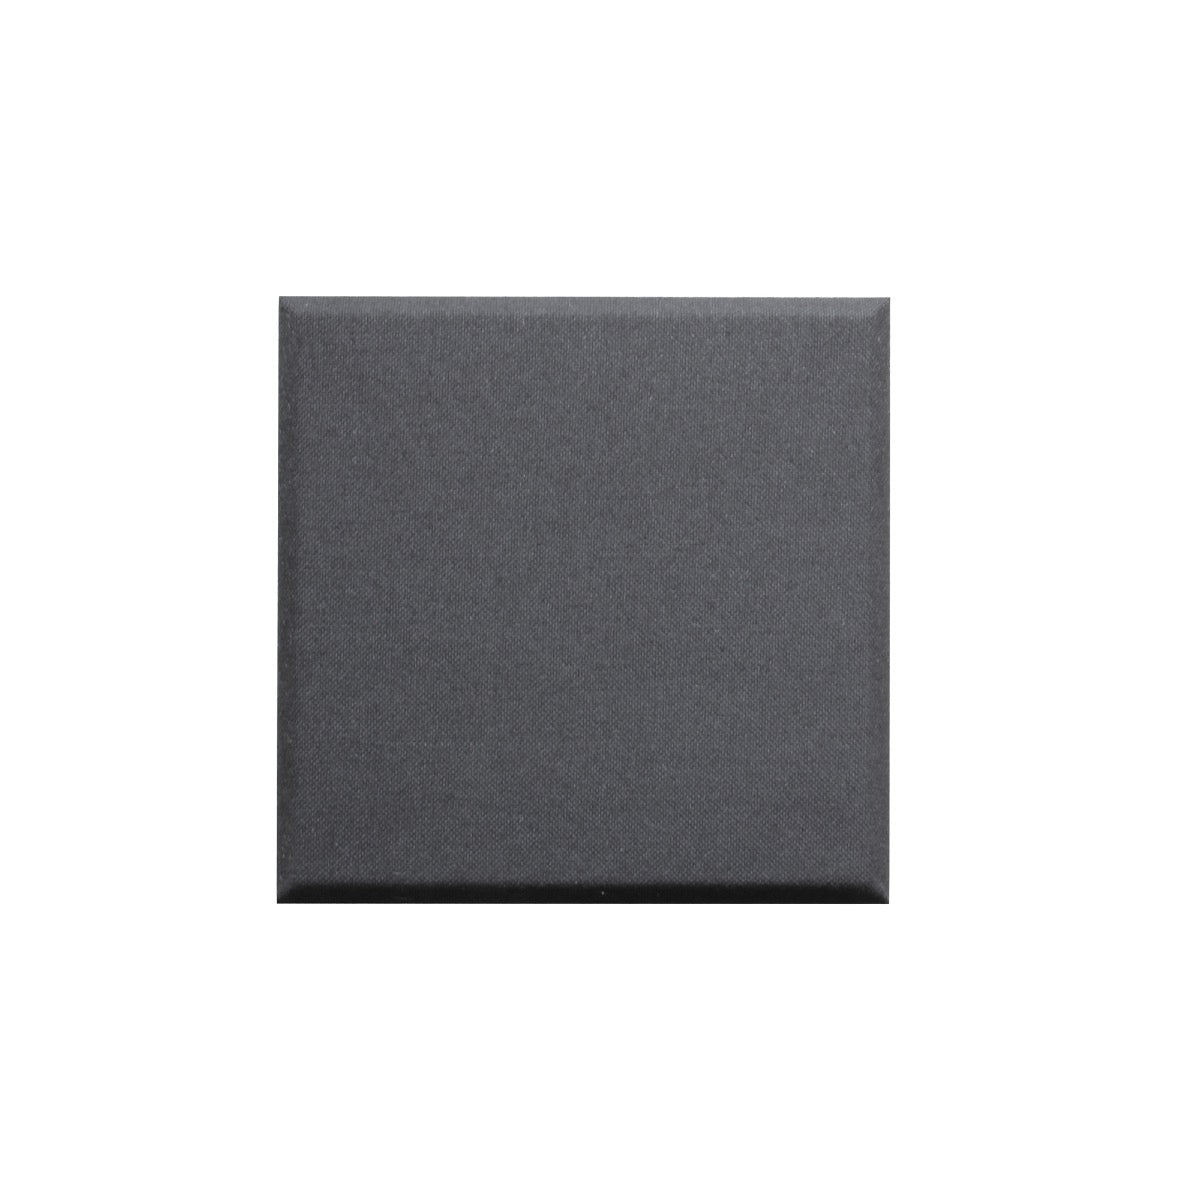 Primacoustic 2" Control Cube Panel - Beveled Edge - Black - 12 Pack